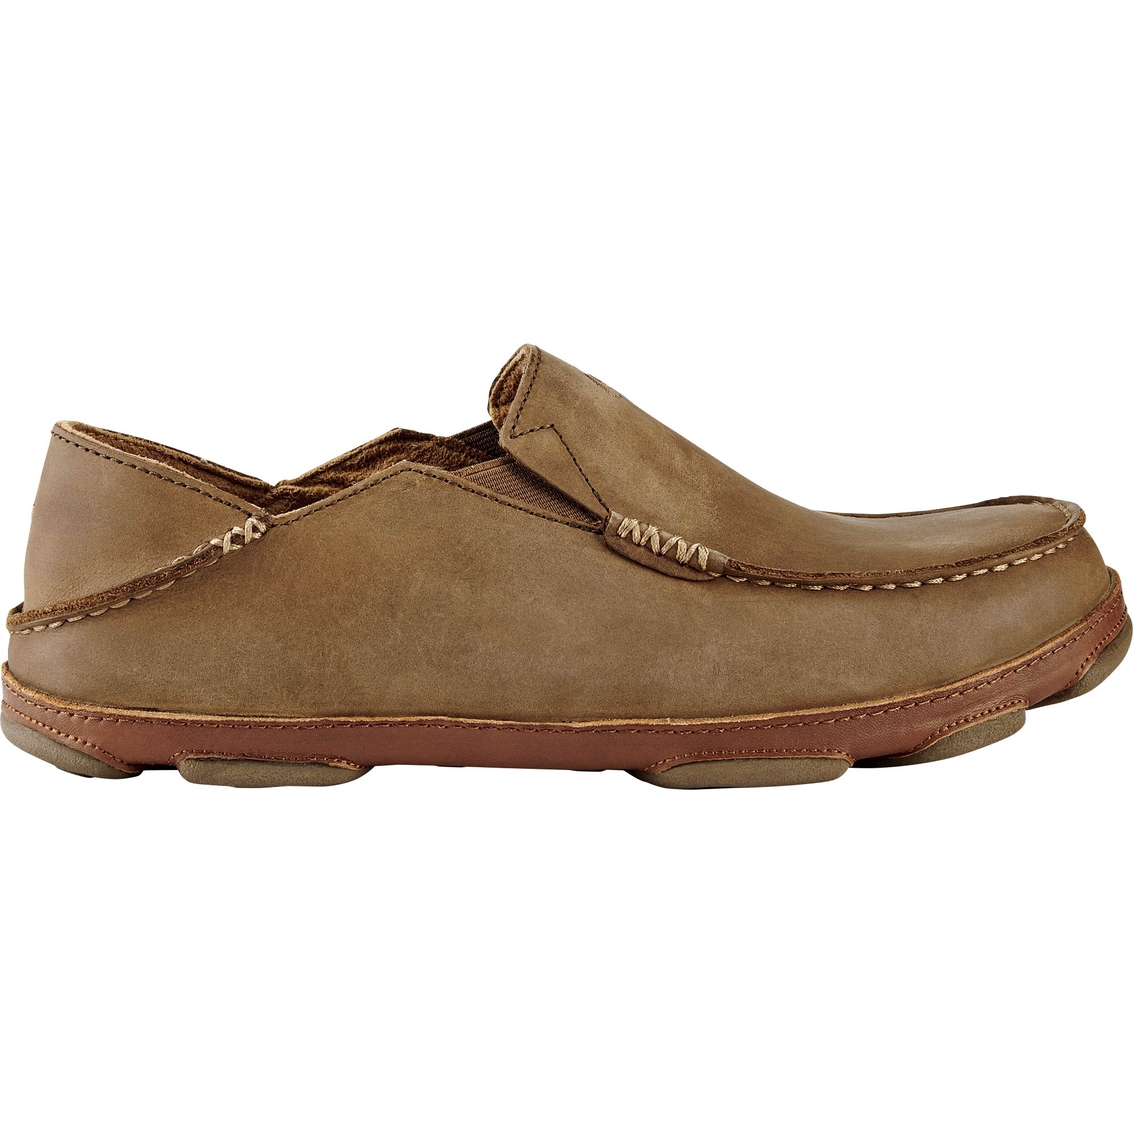 Olukai Men's Moloa Premium Leather Slip On Shoes - Image 2 of 4